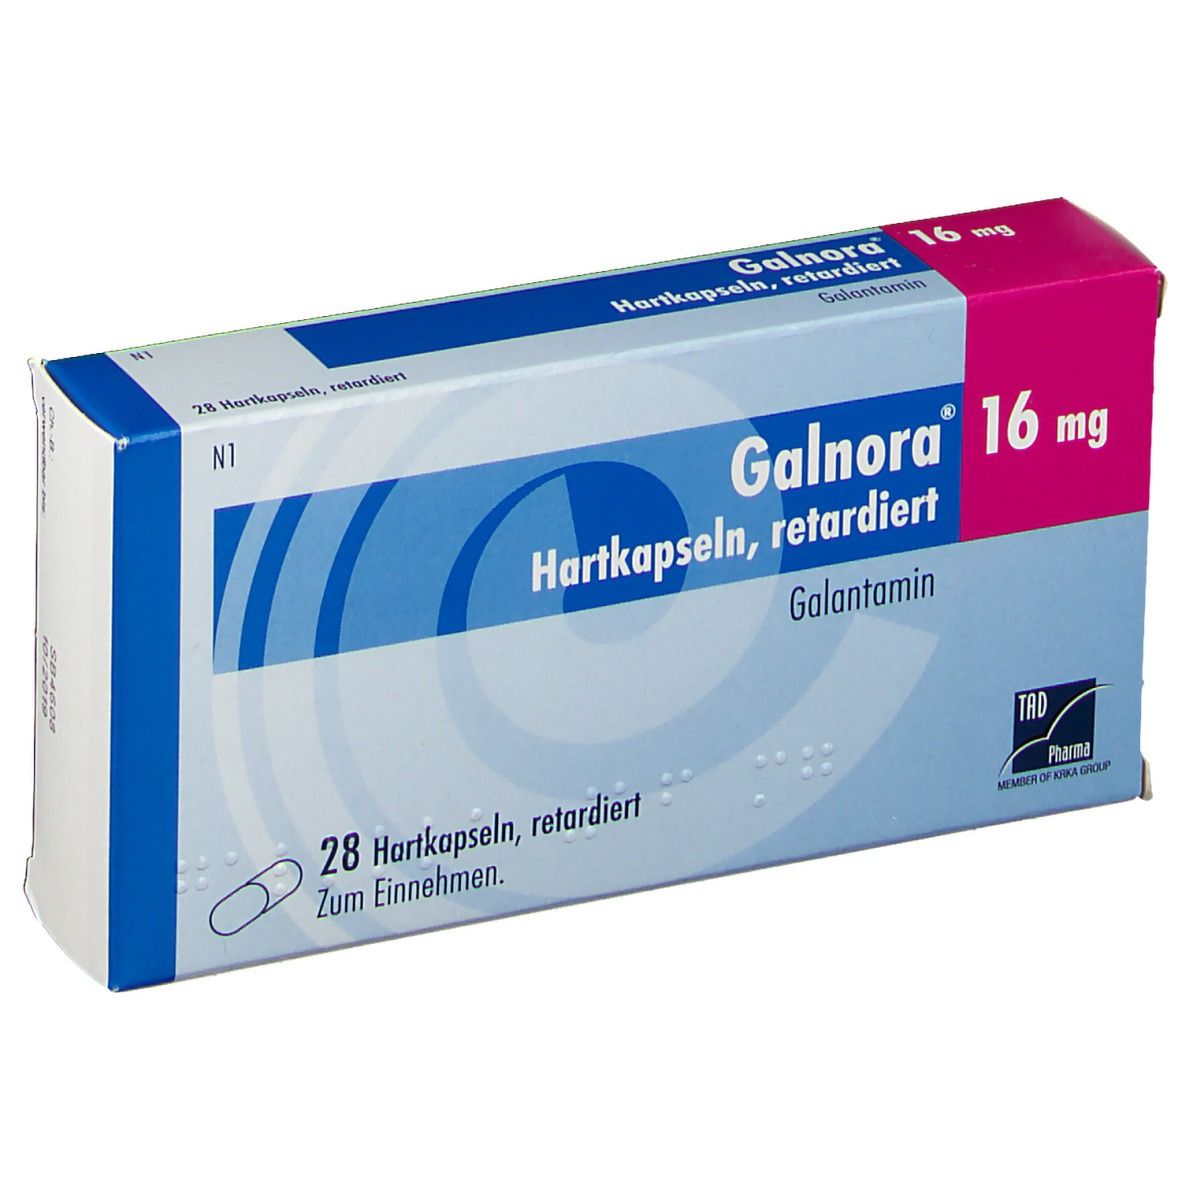 Galnora® 16 mg